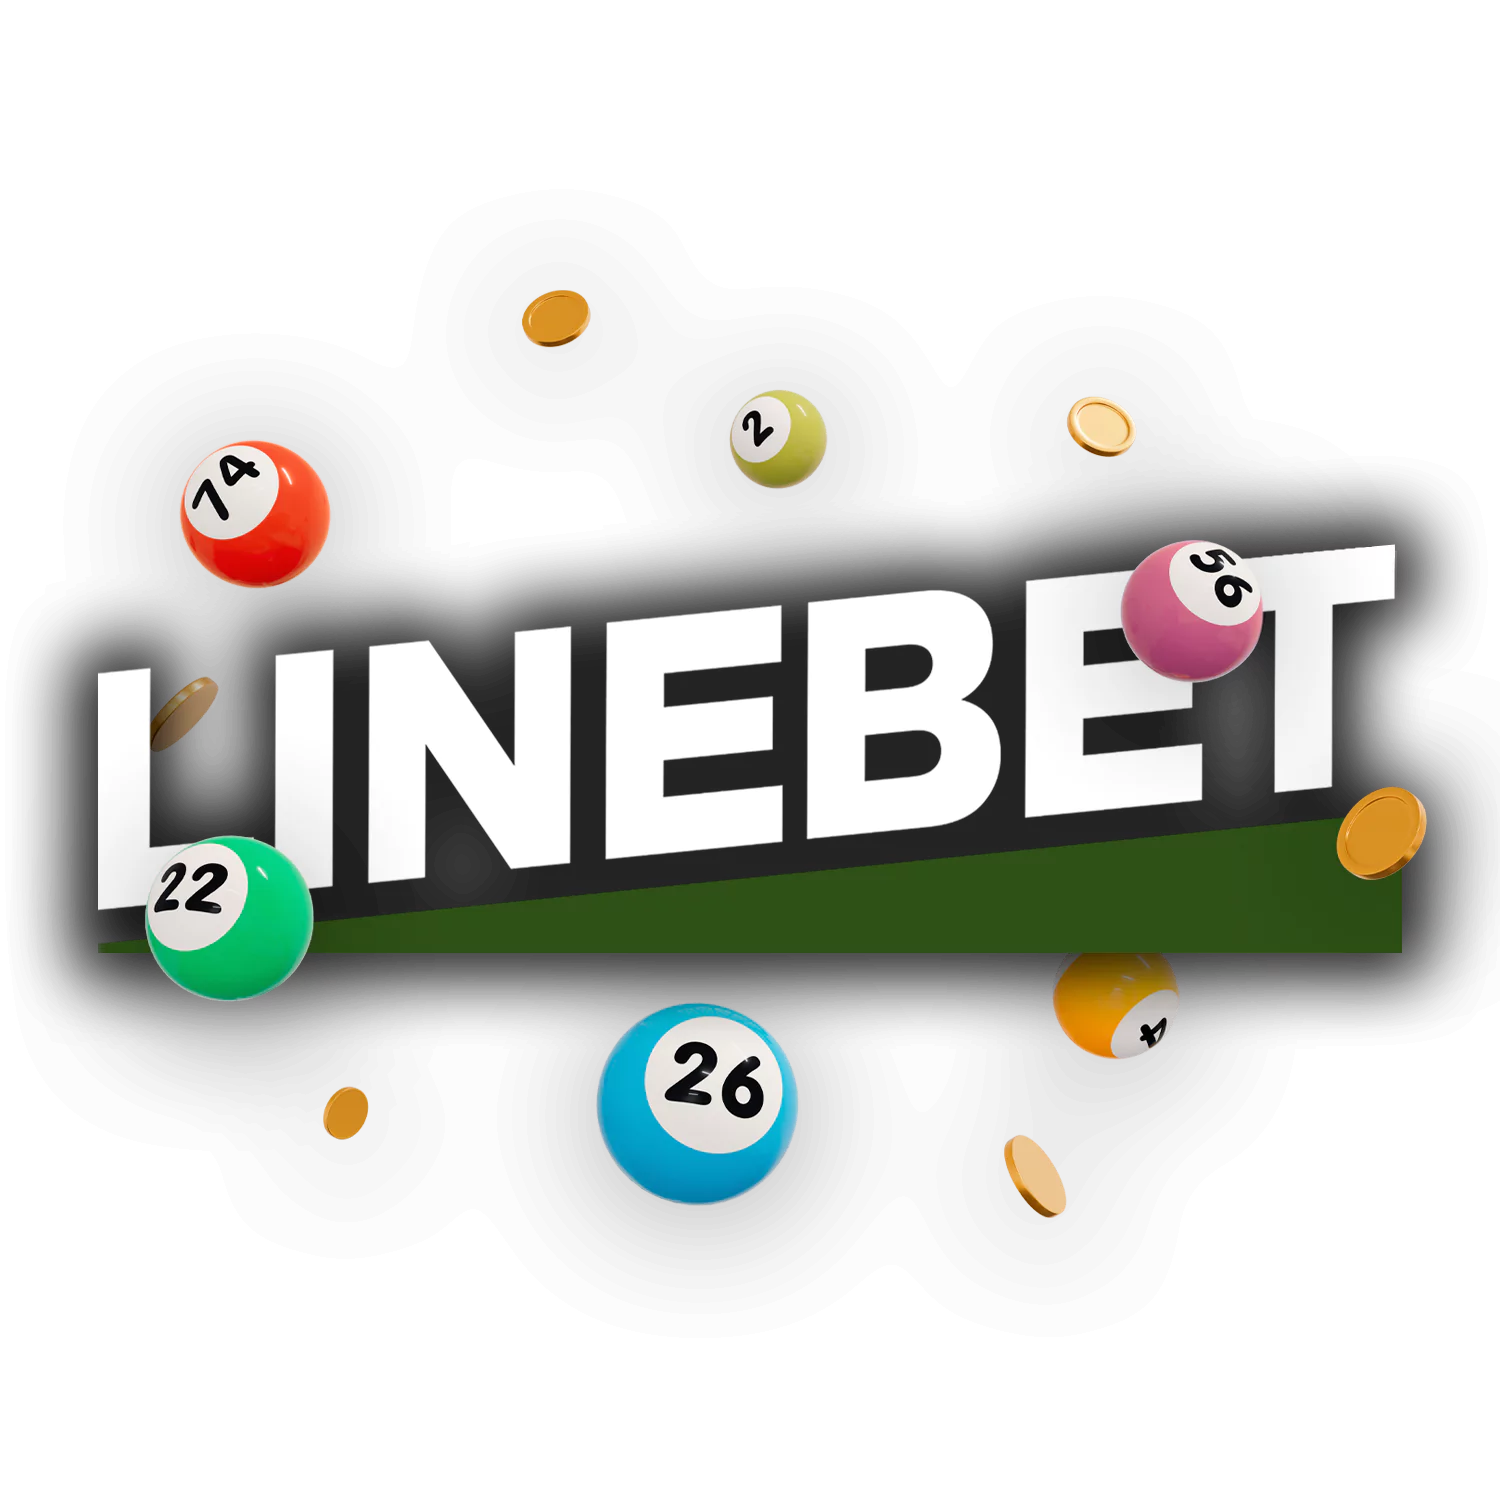 Learn how to play bingo on Linebet.